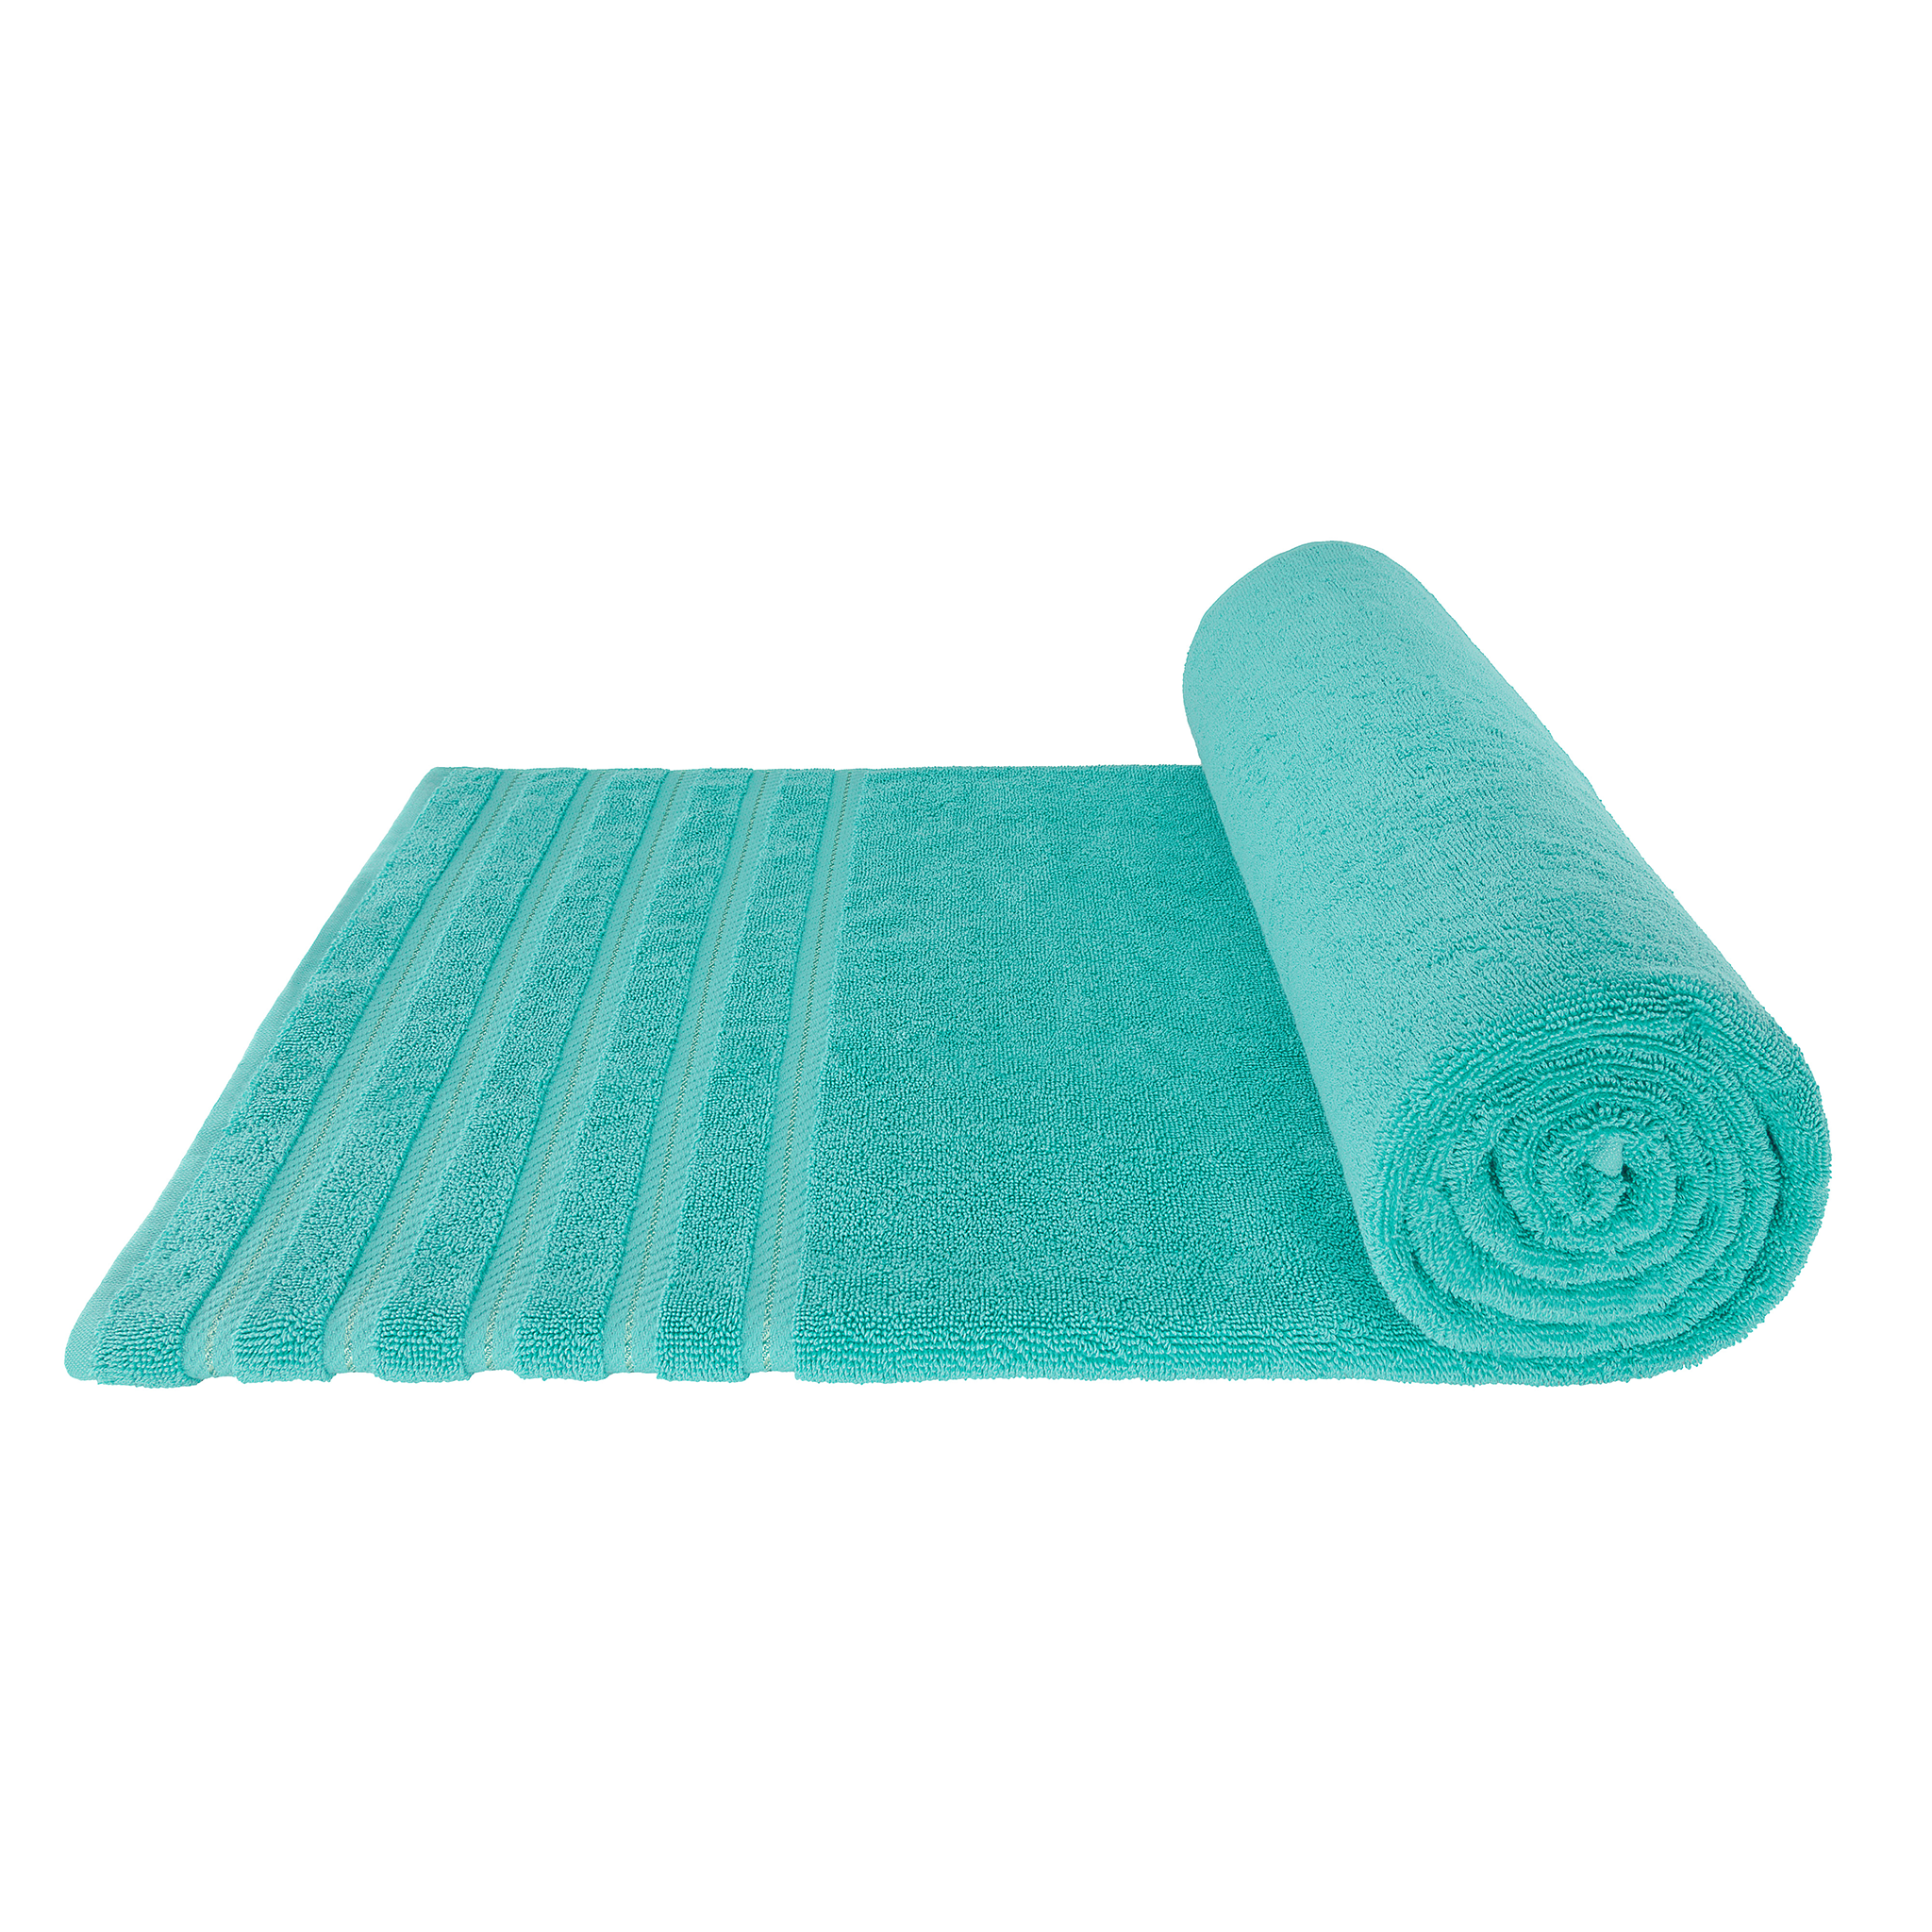 American Soft Linen - 35x70 Jumbo Bath Sheet Turkish Bath Towel - 16 Piece Case Pack - Turquoise-Blue - 6